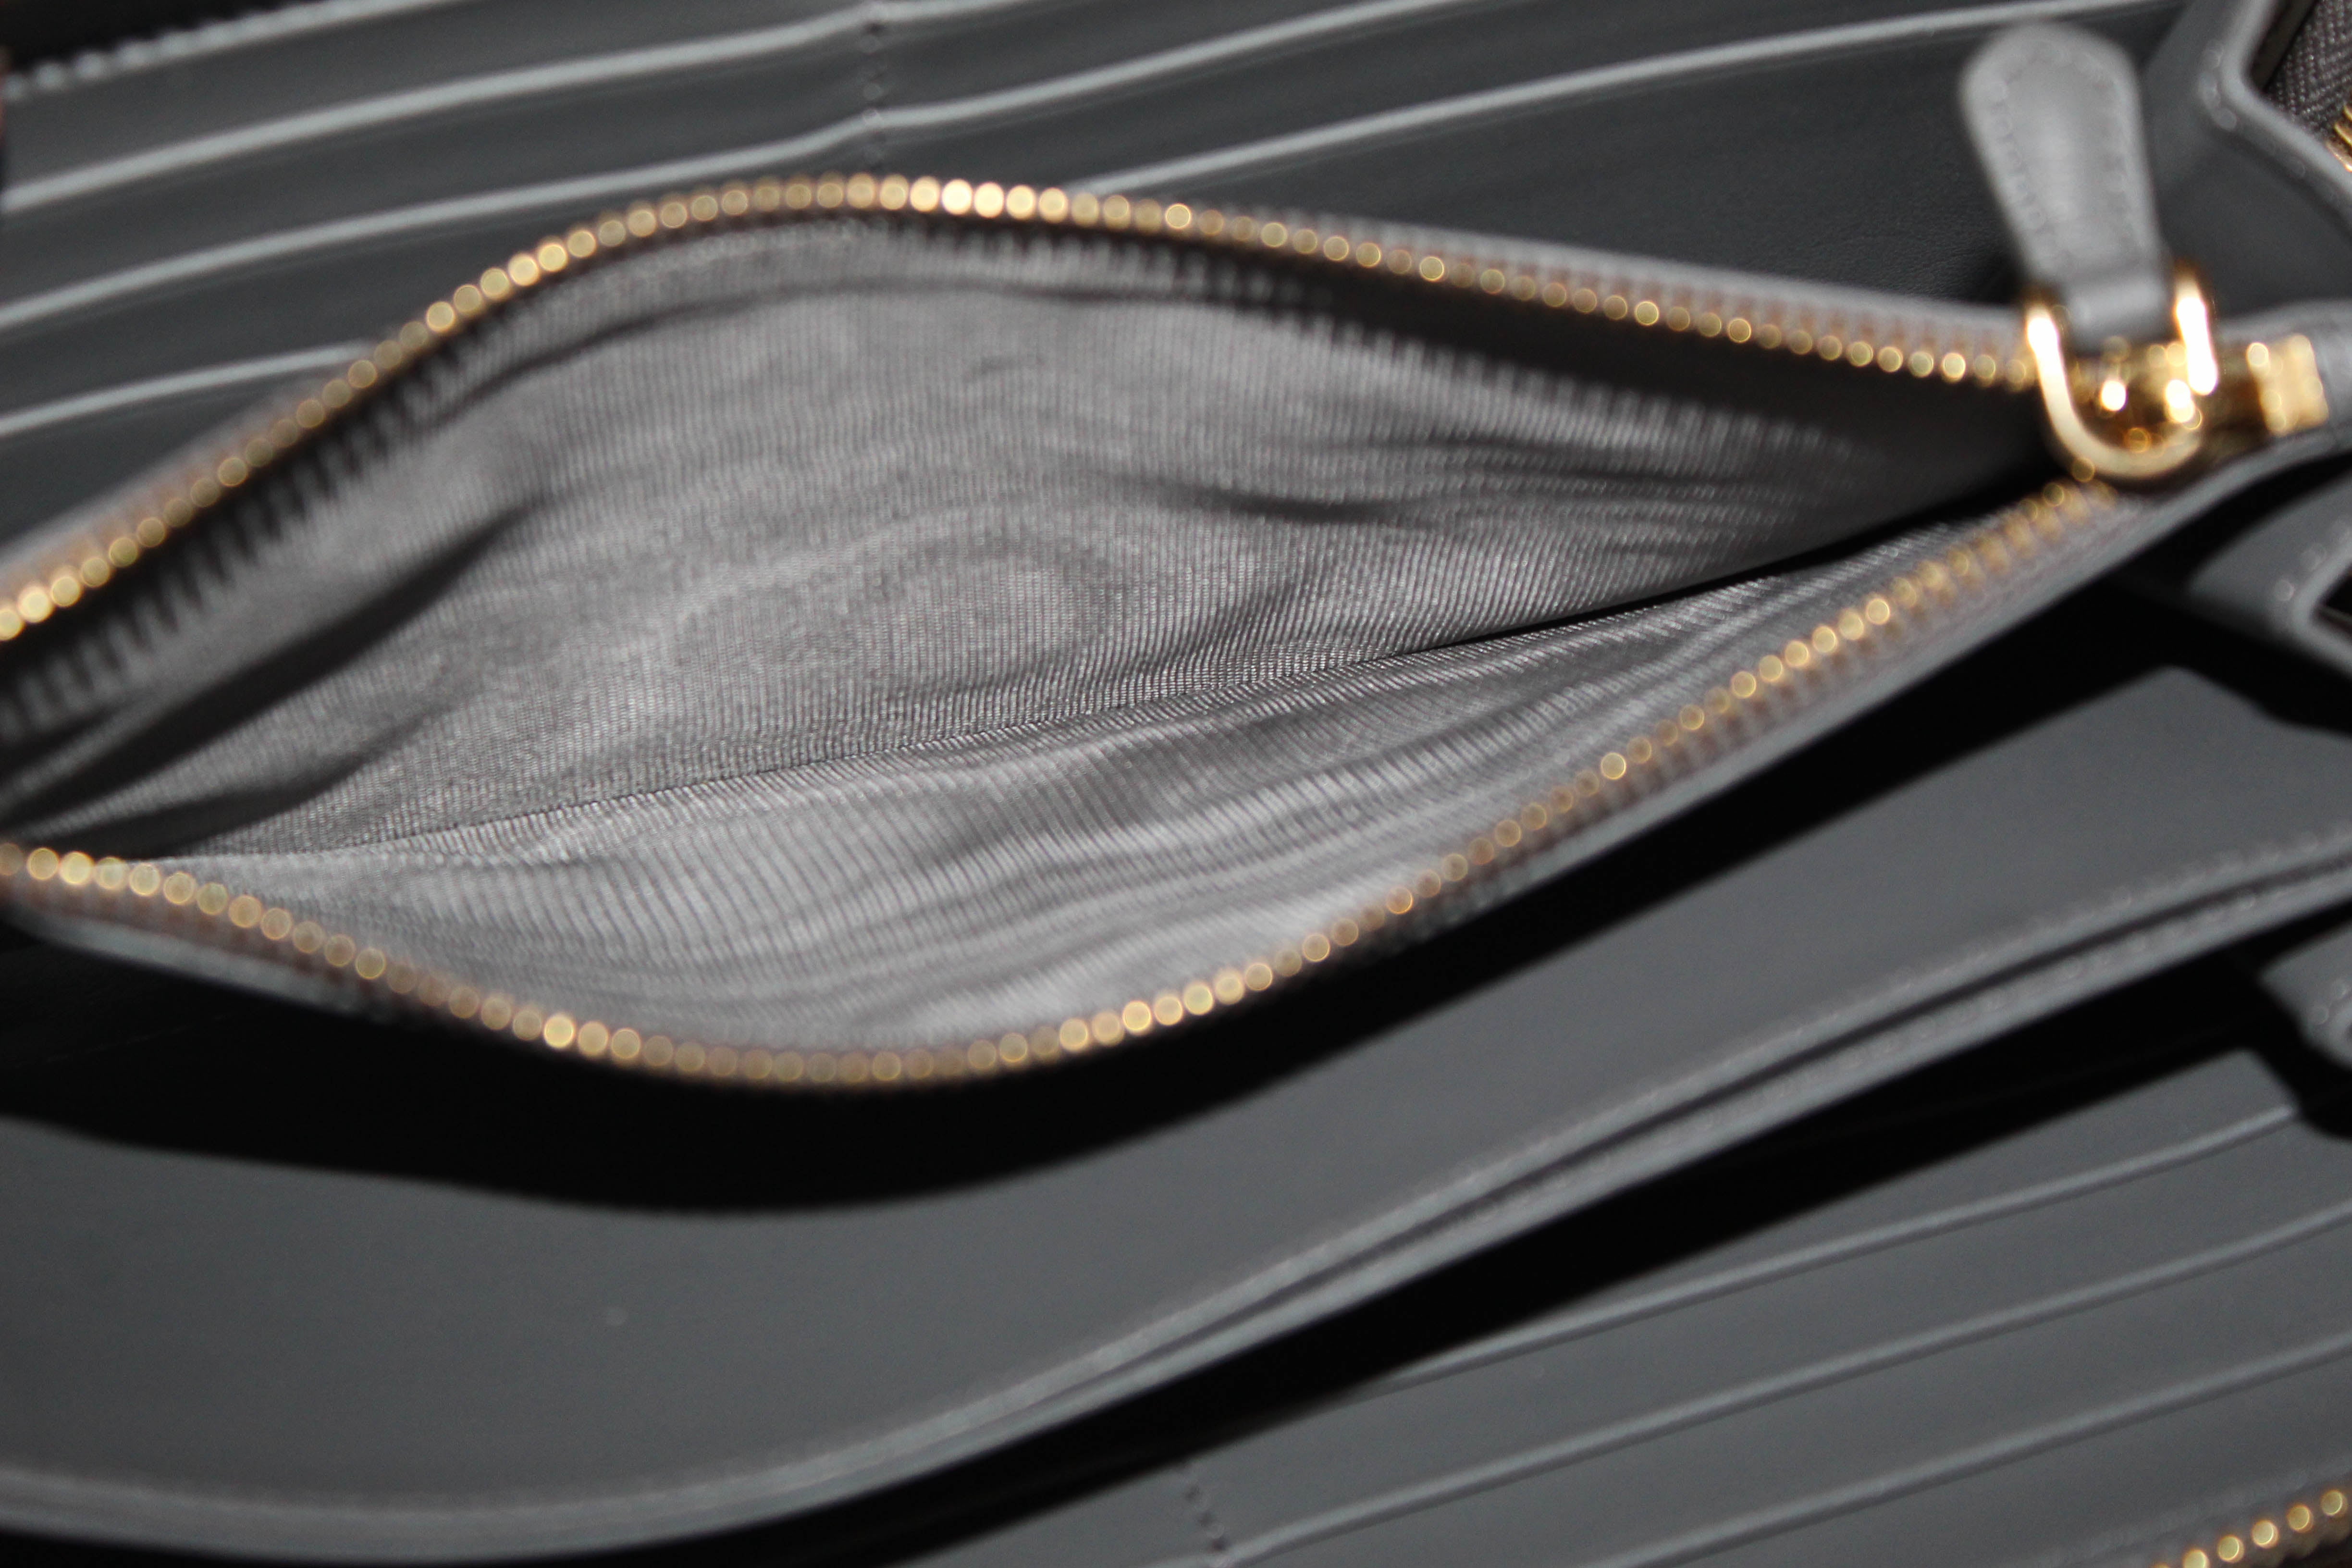 Prada Tessuto Bow-Detail Cross-Body Bag in Black